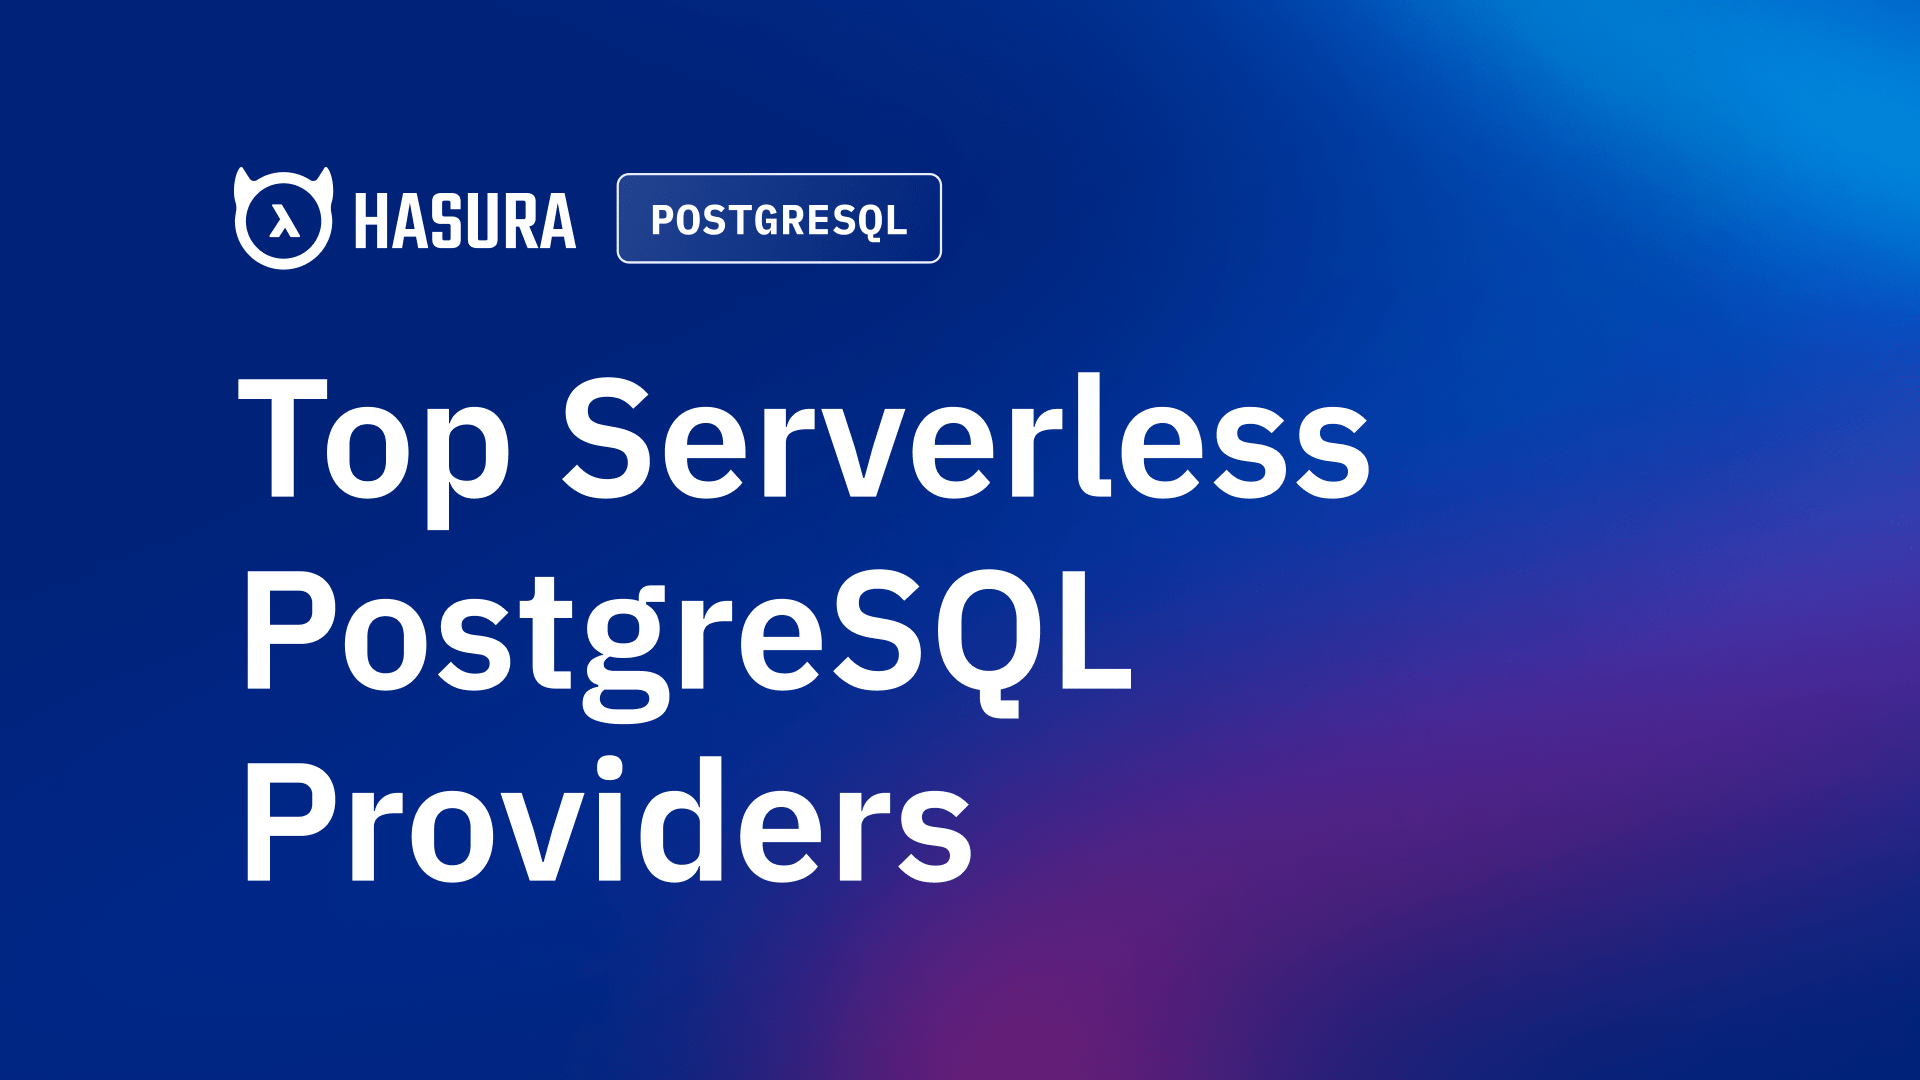 Top Serverless PostgreSQL Providers